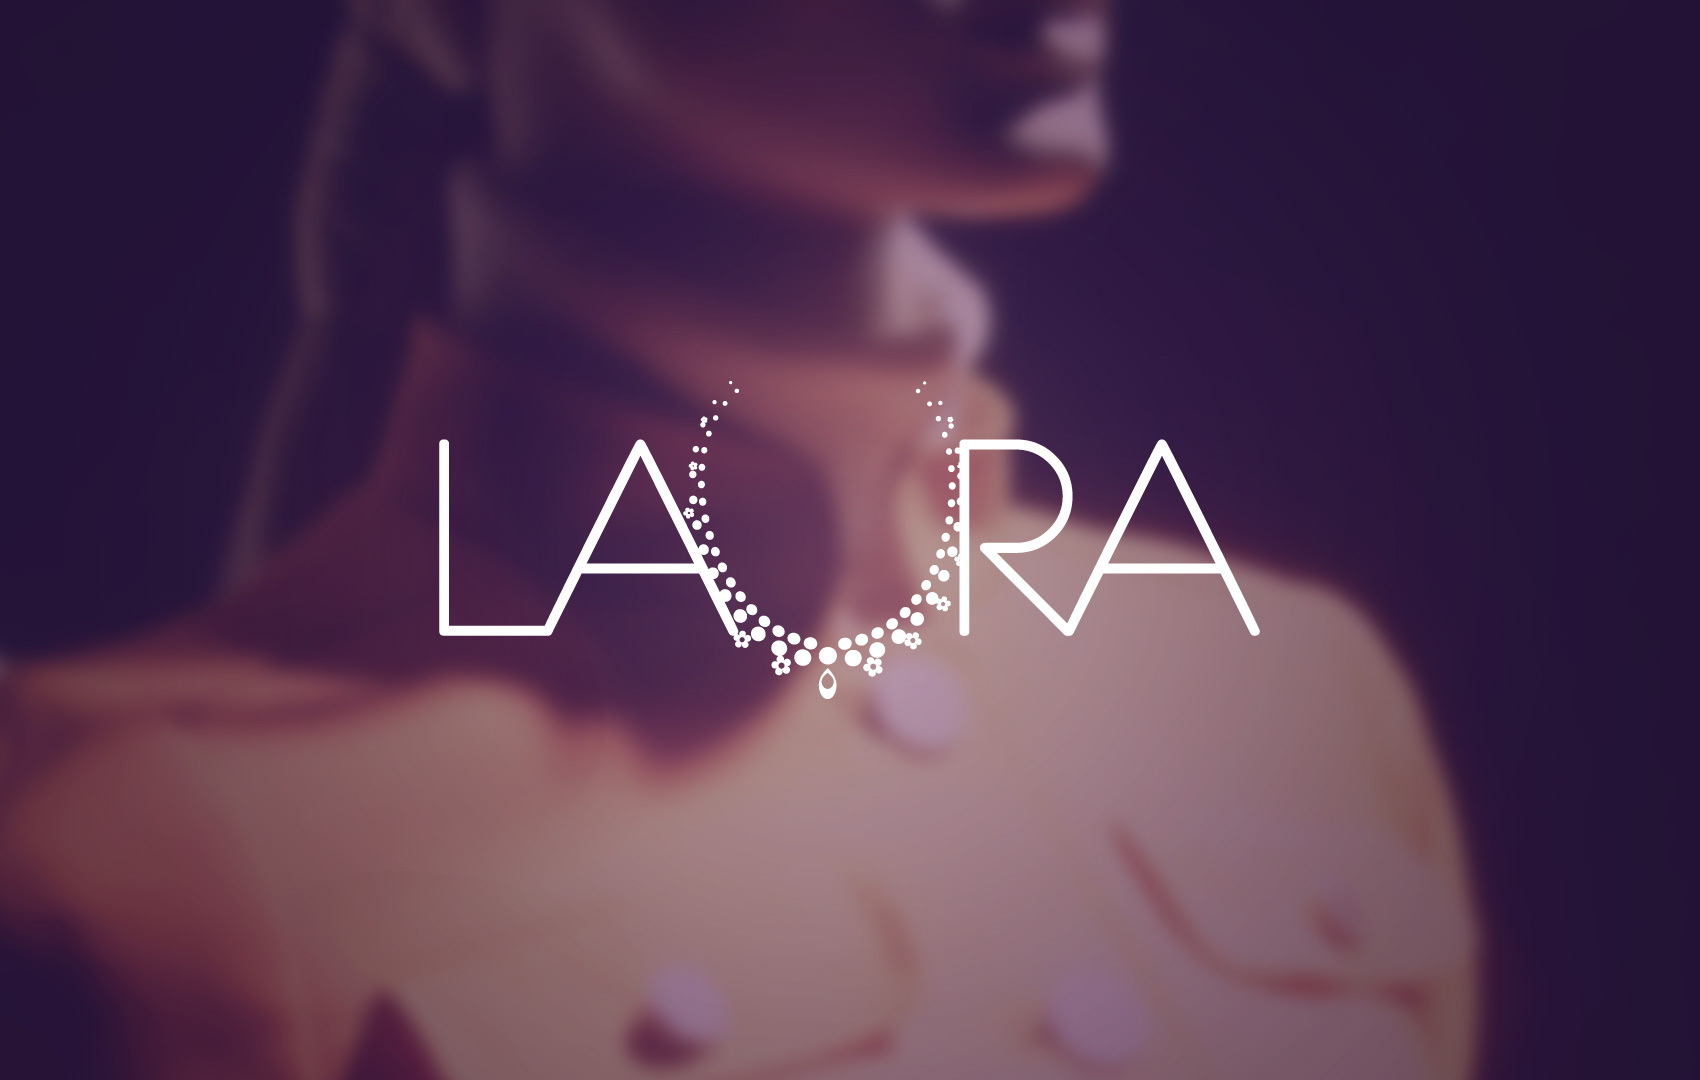 Laura, logotype design by hibriden